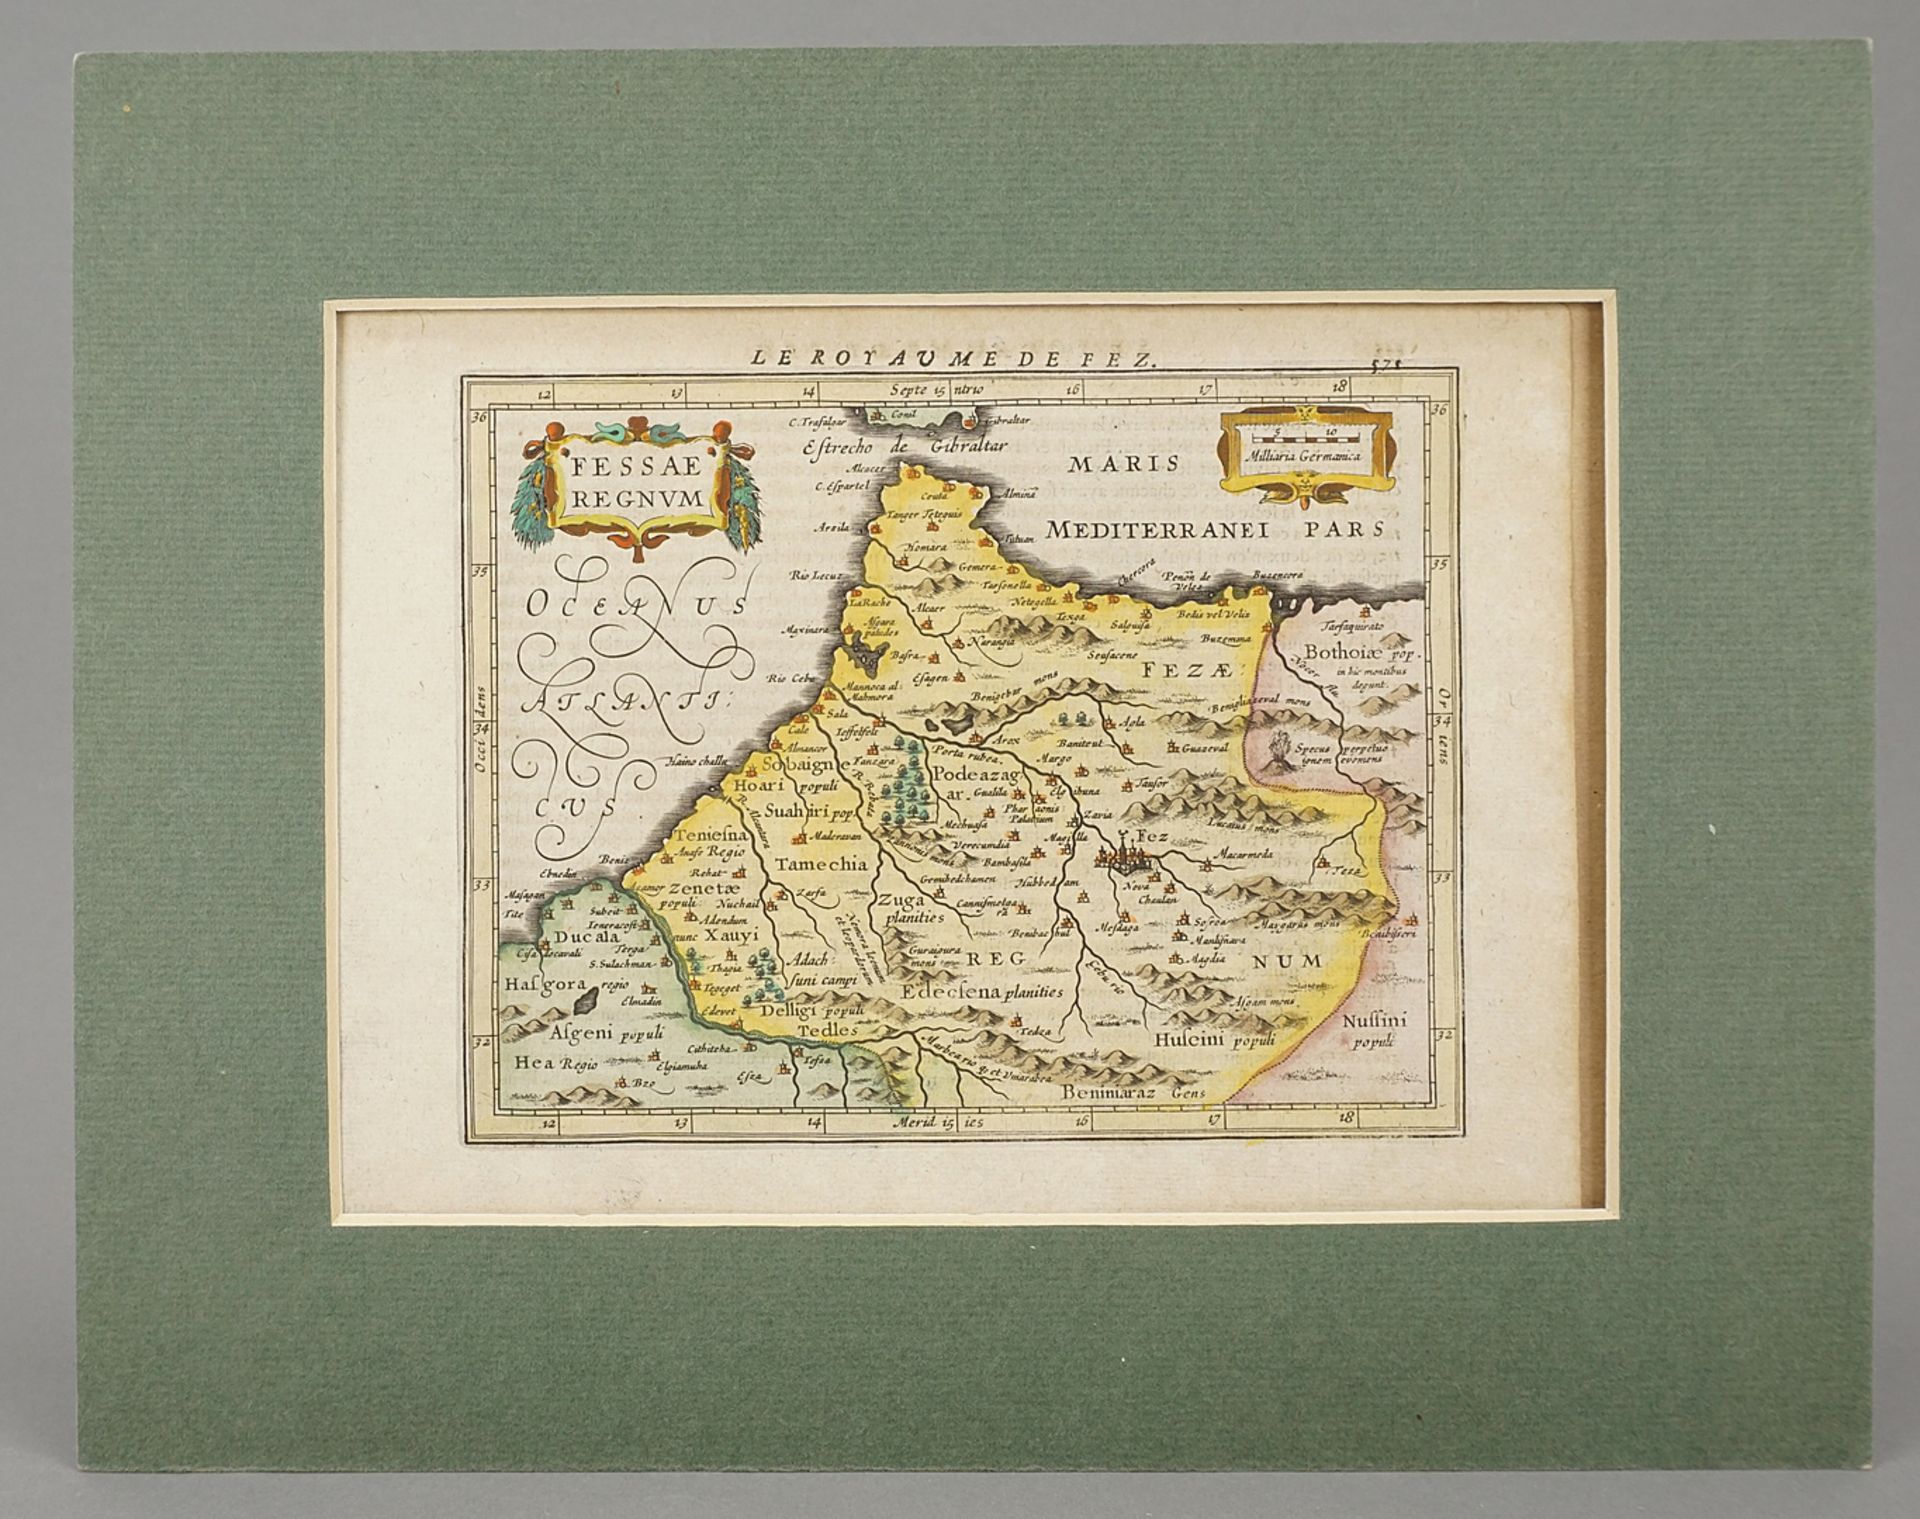 Gerhard Mercator (1512-1594), "Le Royaume de Fez" (Map of Morocco) - Image 2 of 4